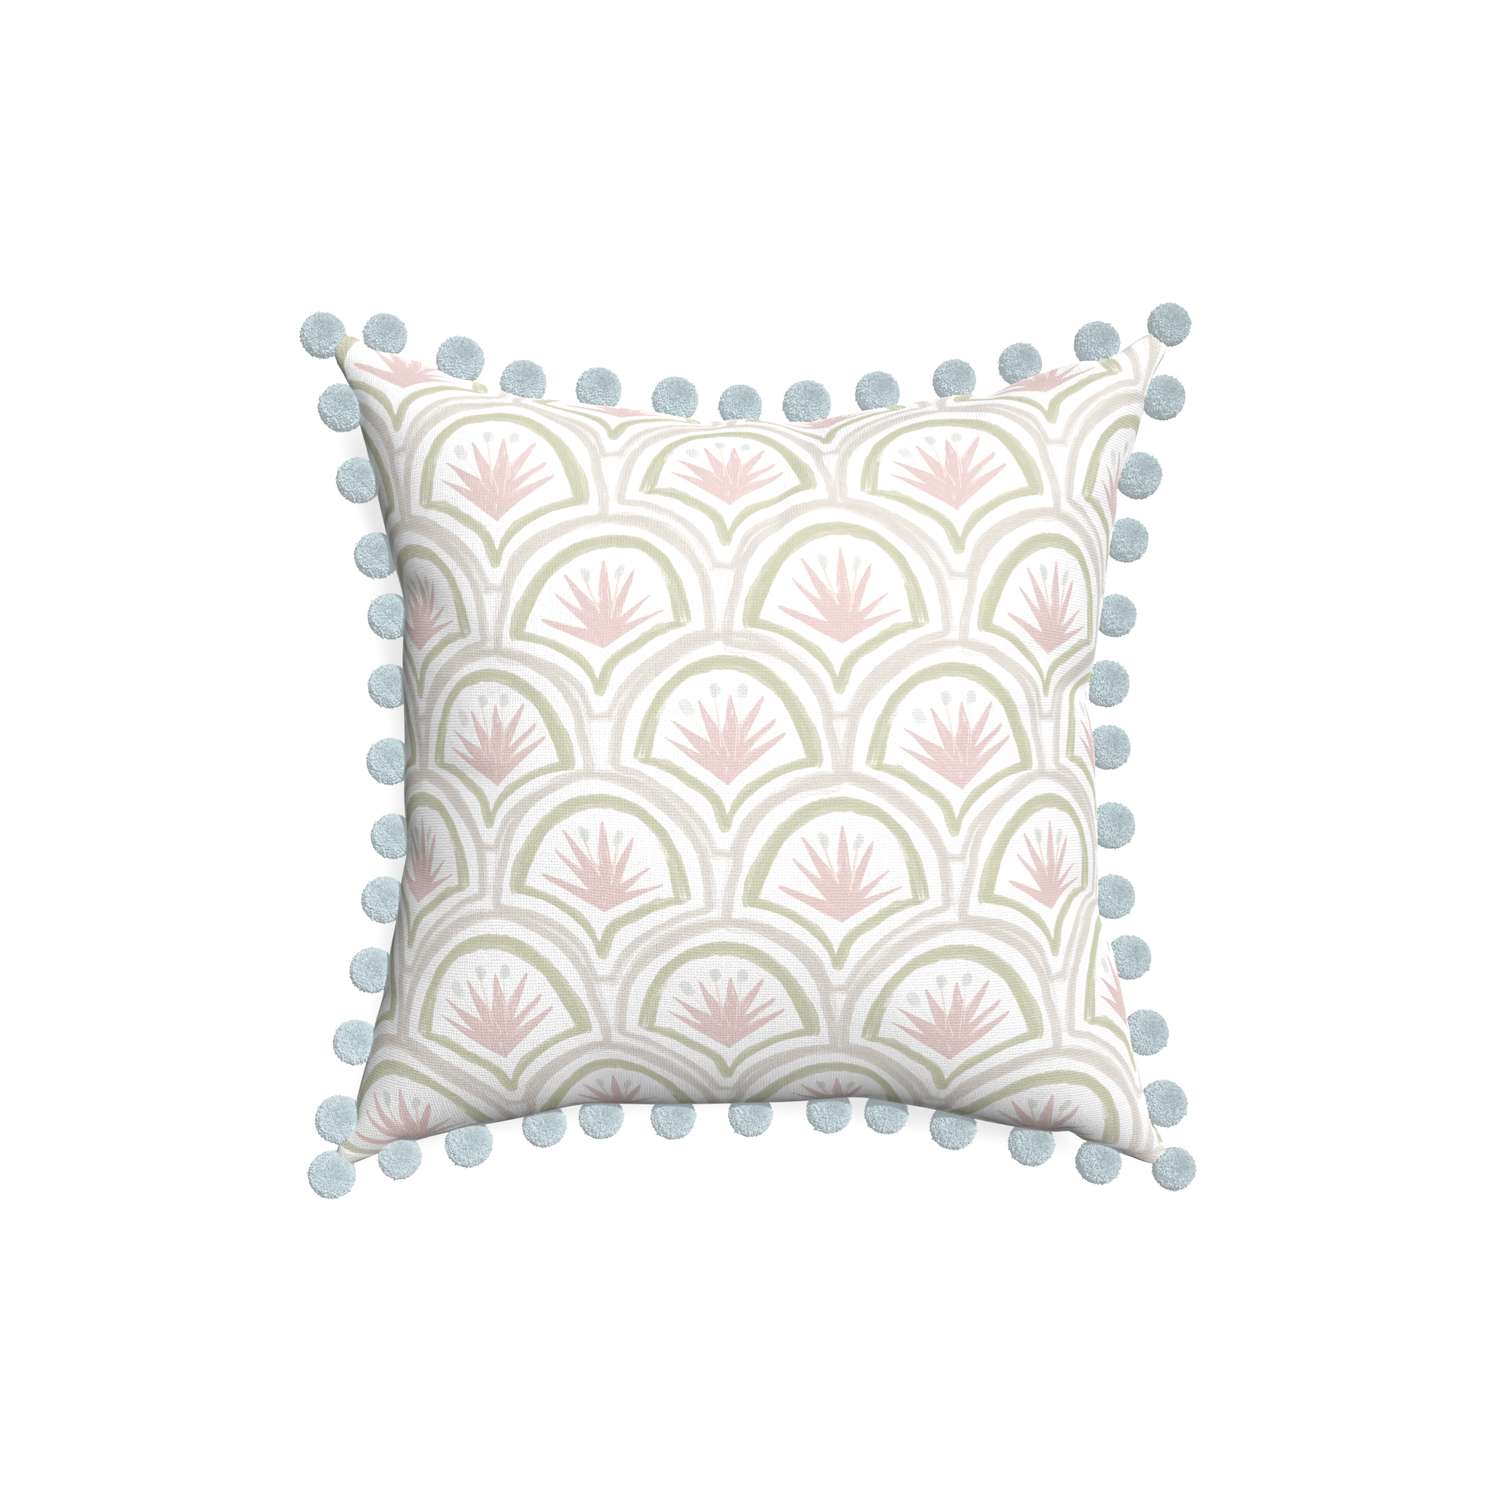 18-square thatcher rose custom pillow with powder pom pom on white background